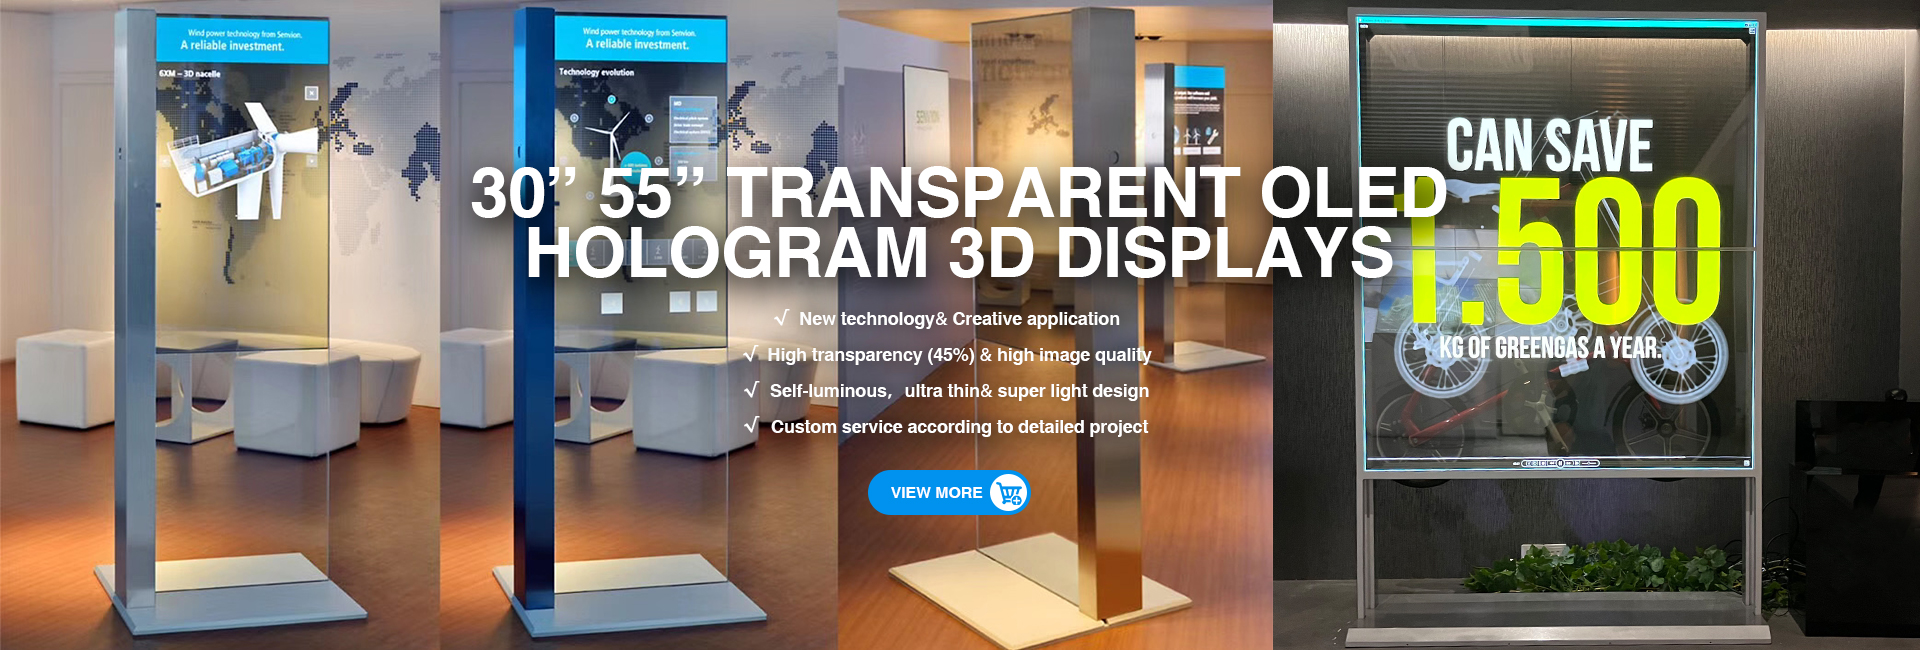 Banner5-Latest high technology Transparent OLED displays